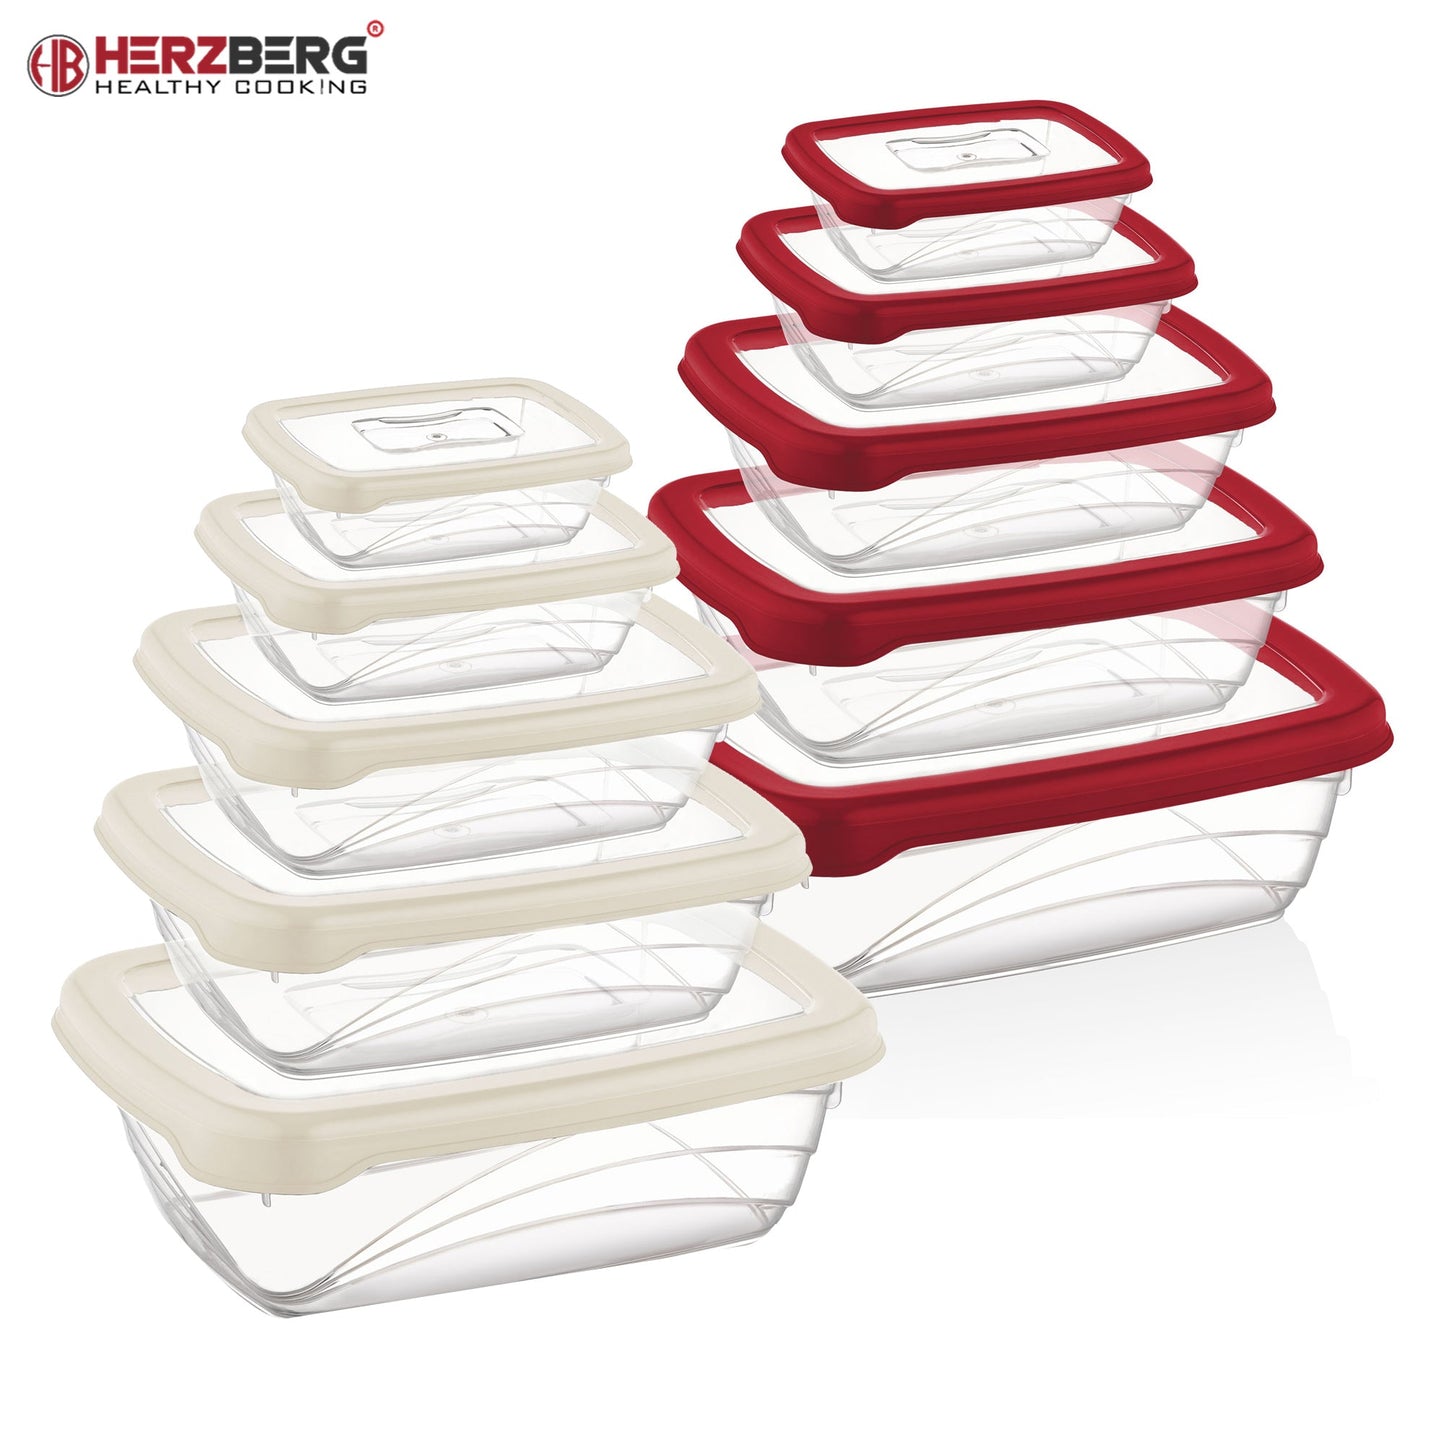 Herzberg HG-L763: 5-delige bio saver box set - Bivakshop